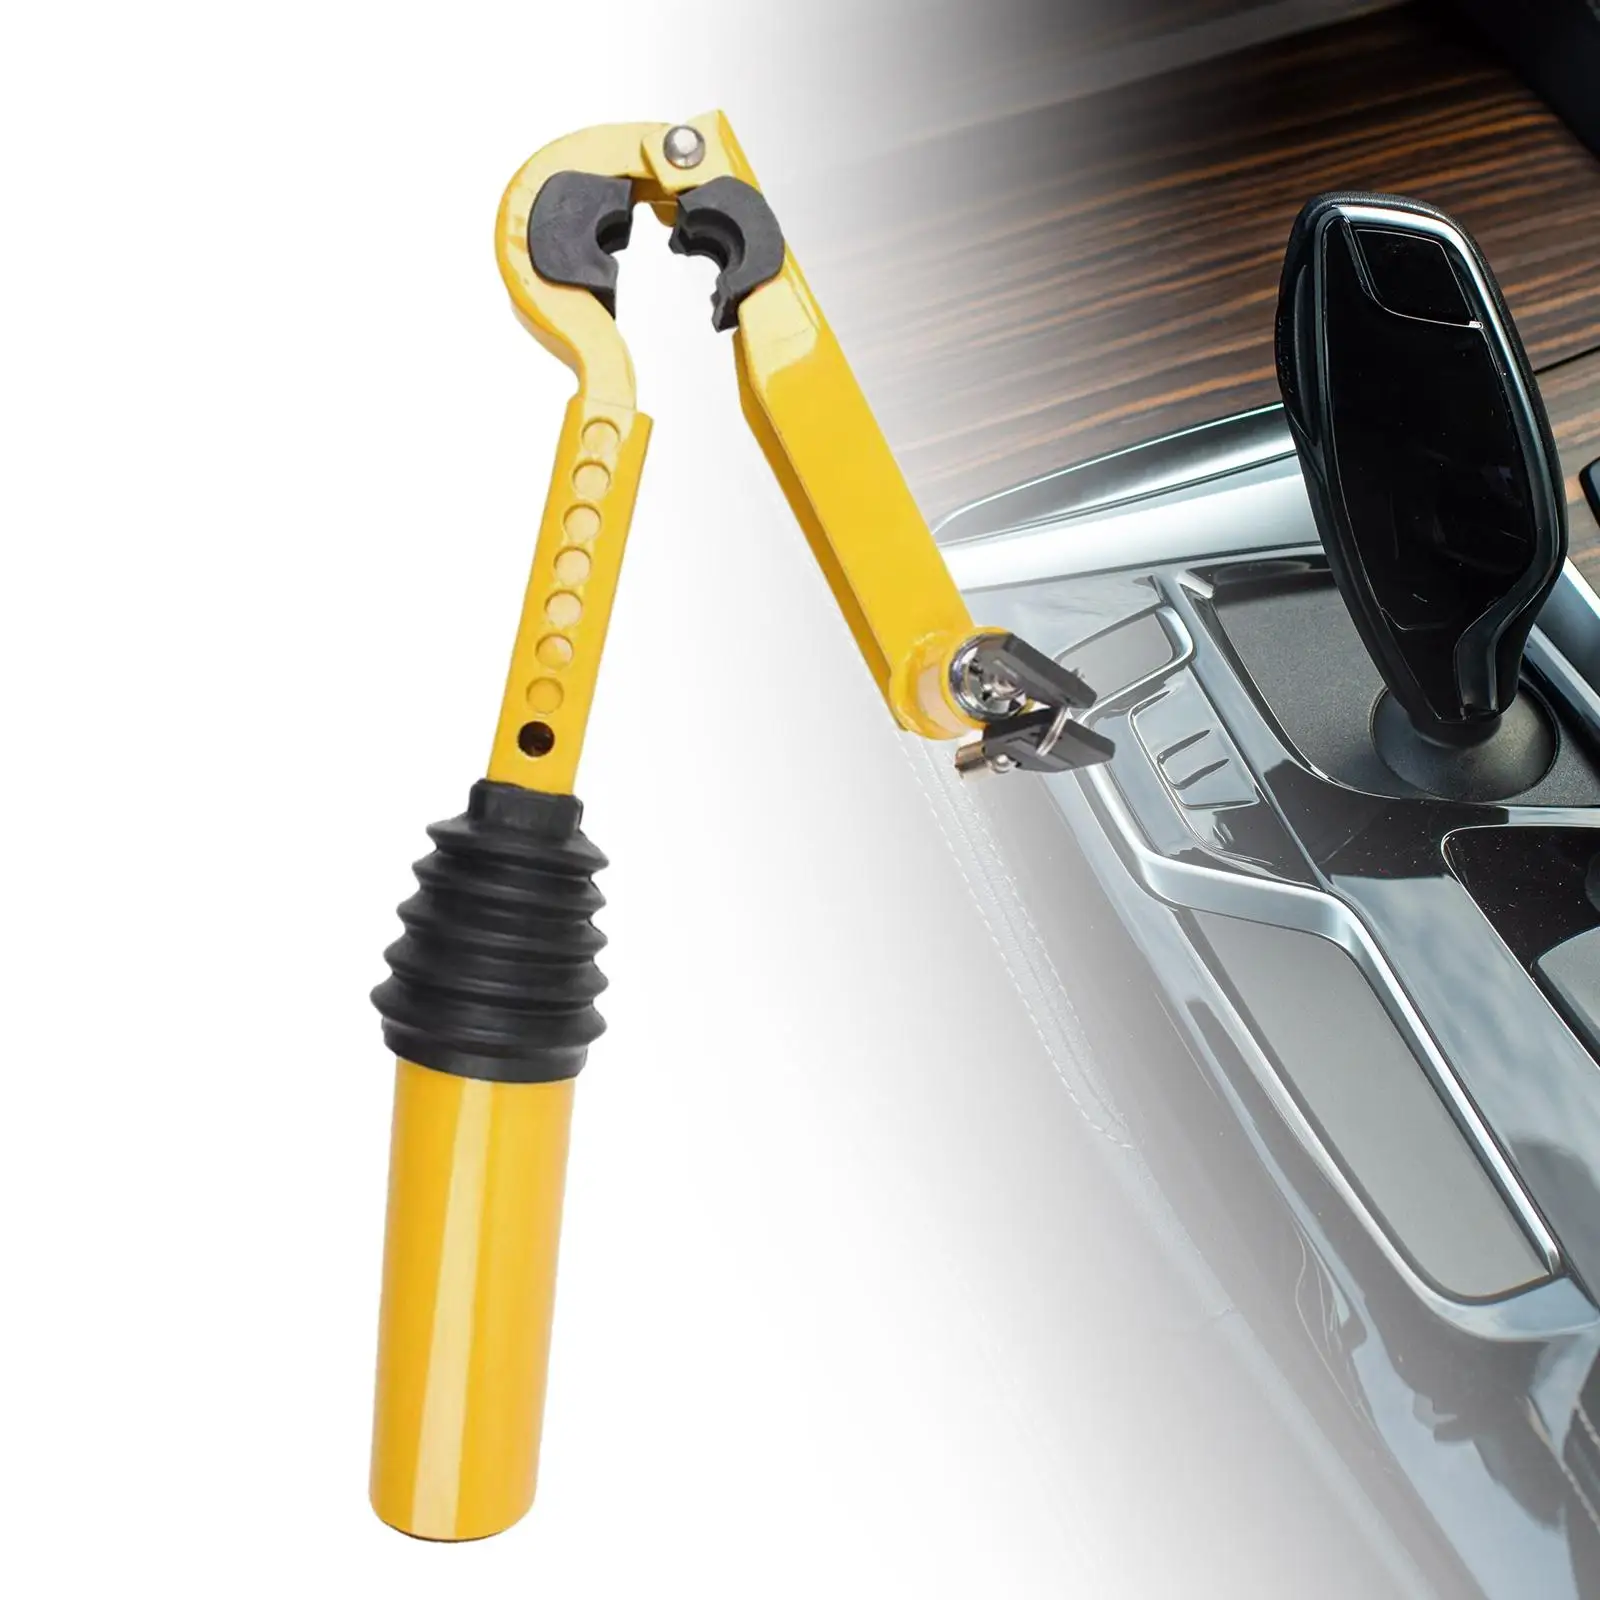 Vehicle Car Handbrake Lock Anti Auto Accessories for Handbrake and Gear